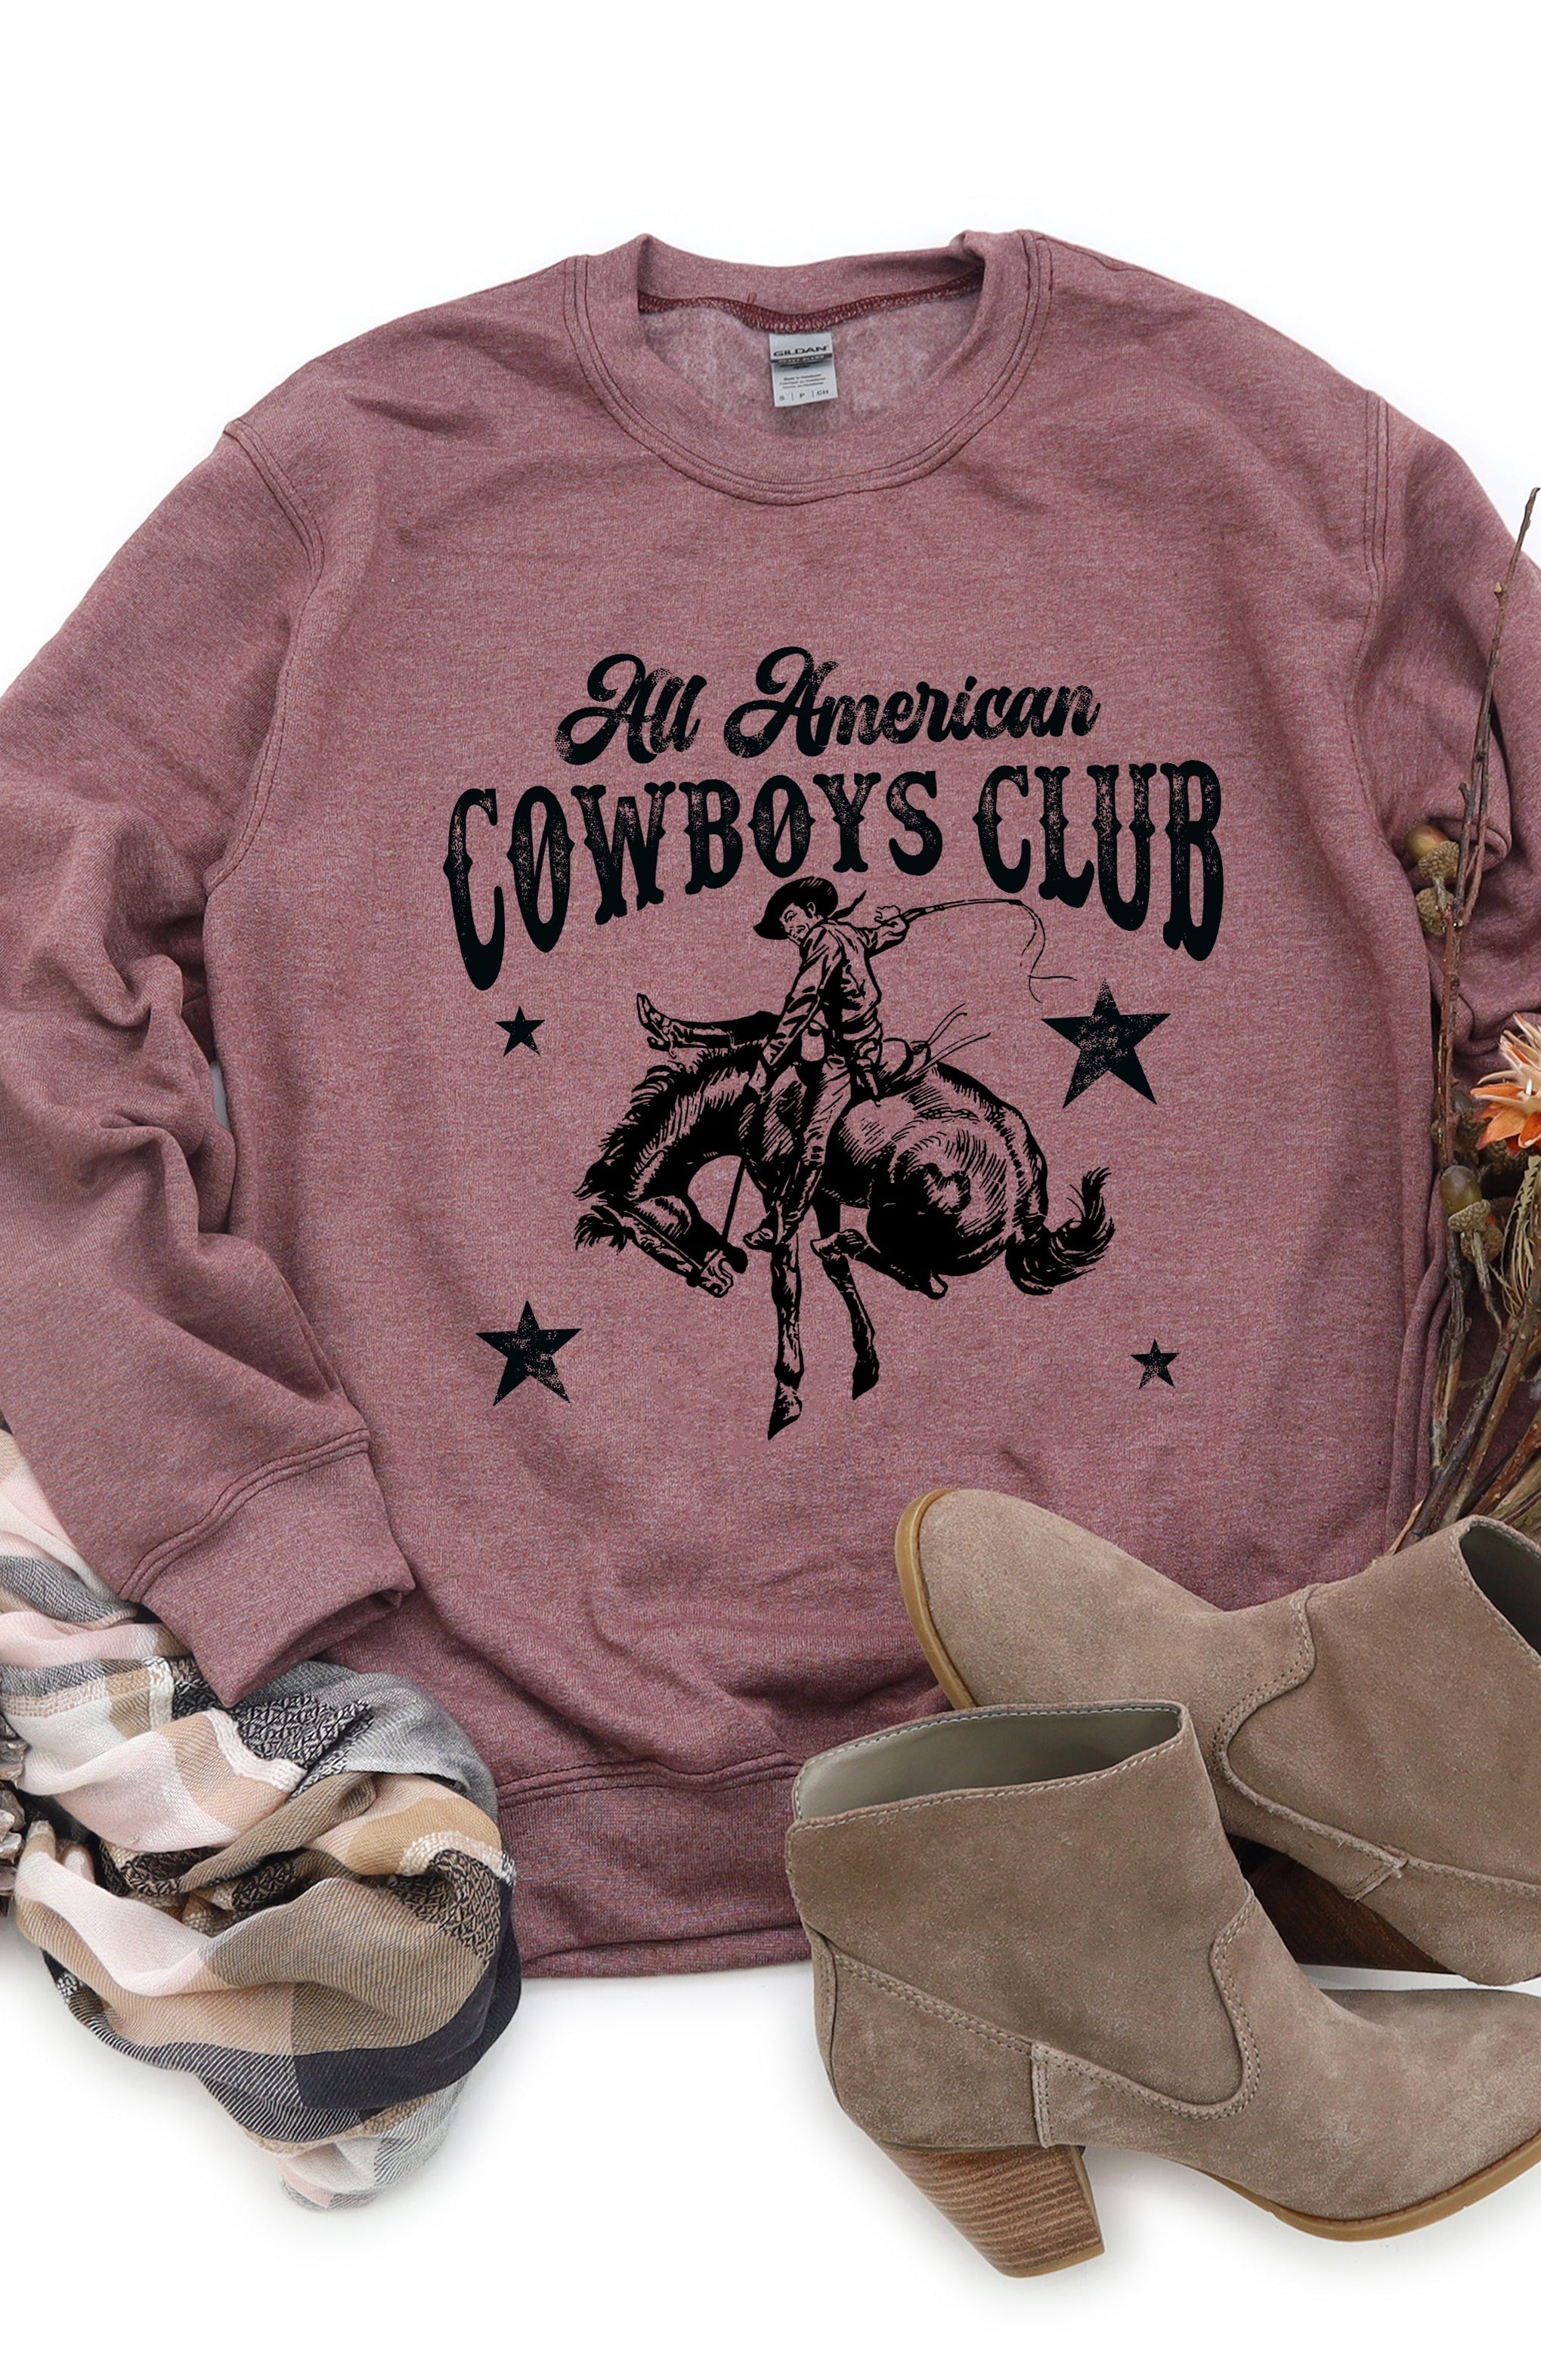 All American Cowboys Club | Sweatshirt Olive and Ivory Retail